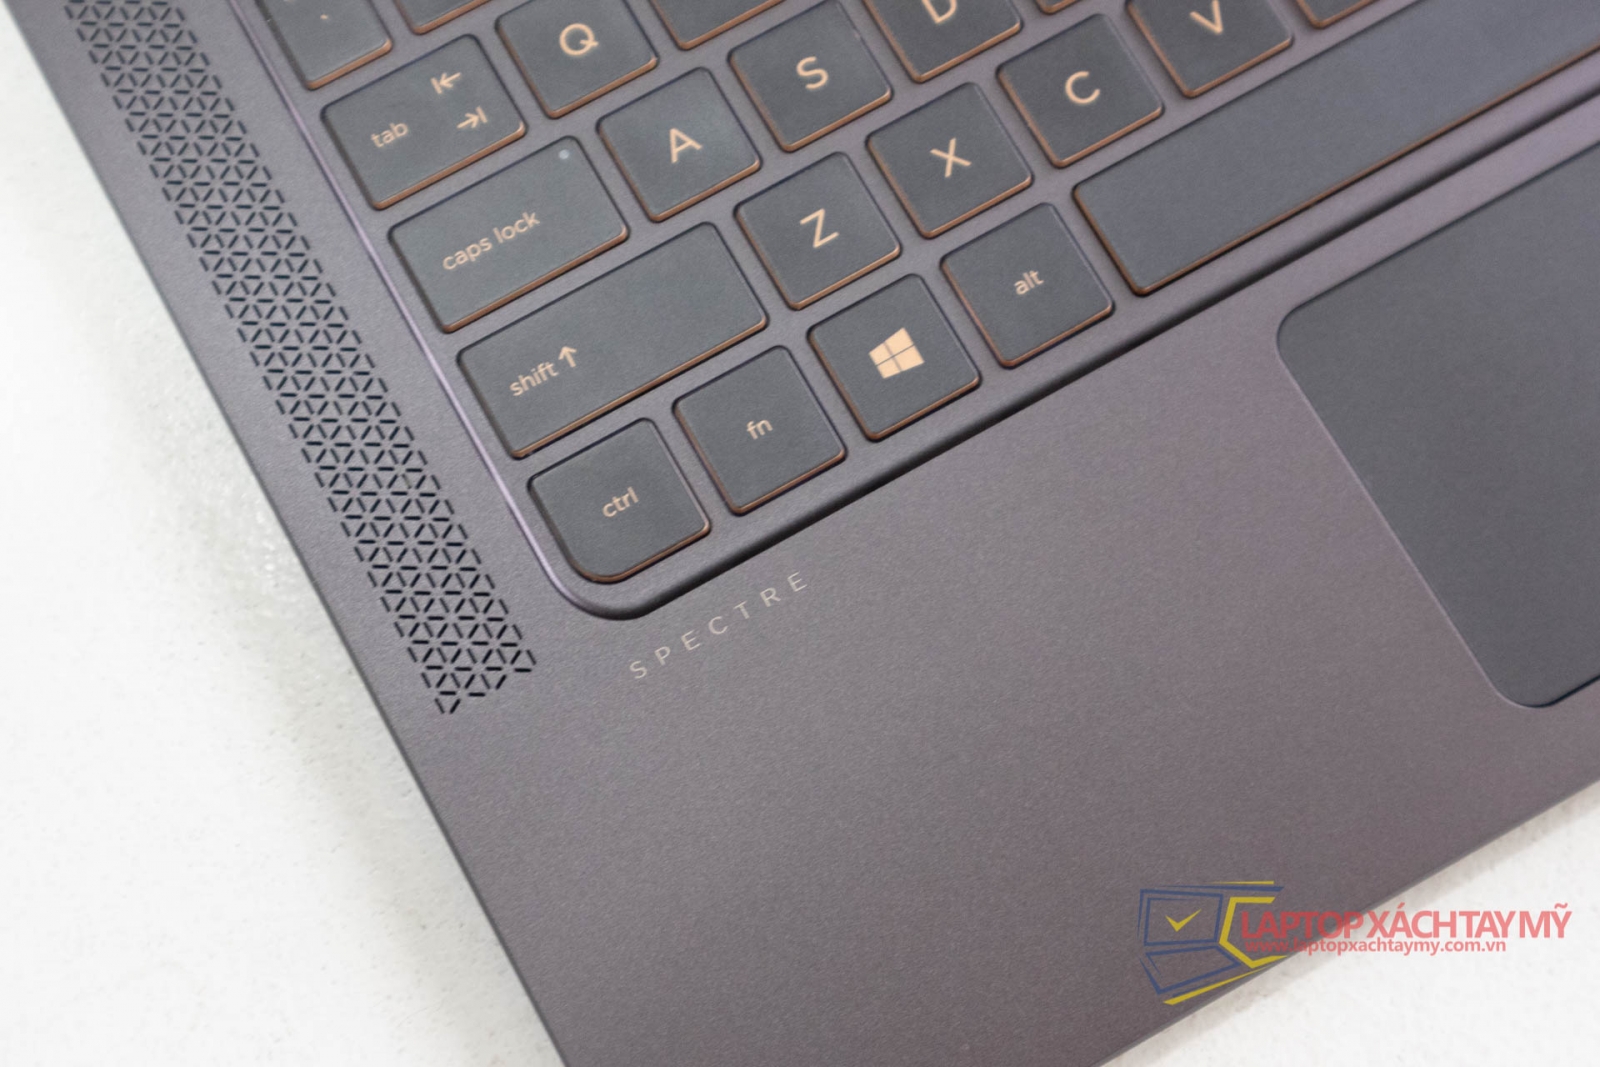 HP Spectre Notebook I7 6500U, Ram 8G, SSD 256G